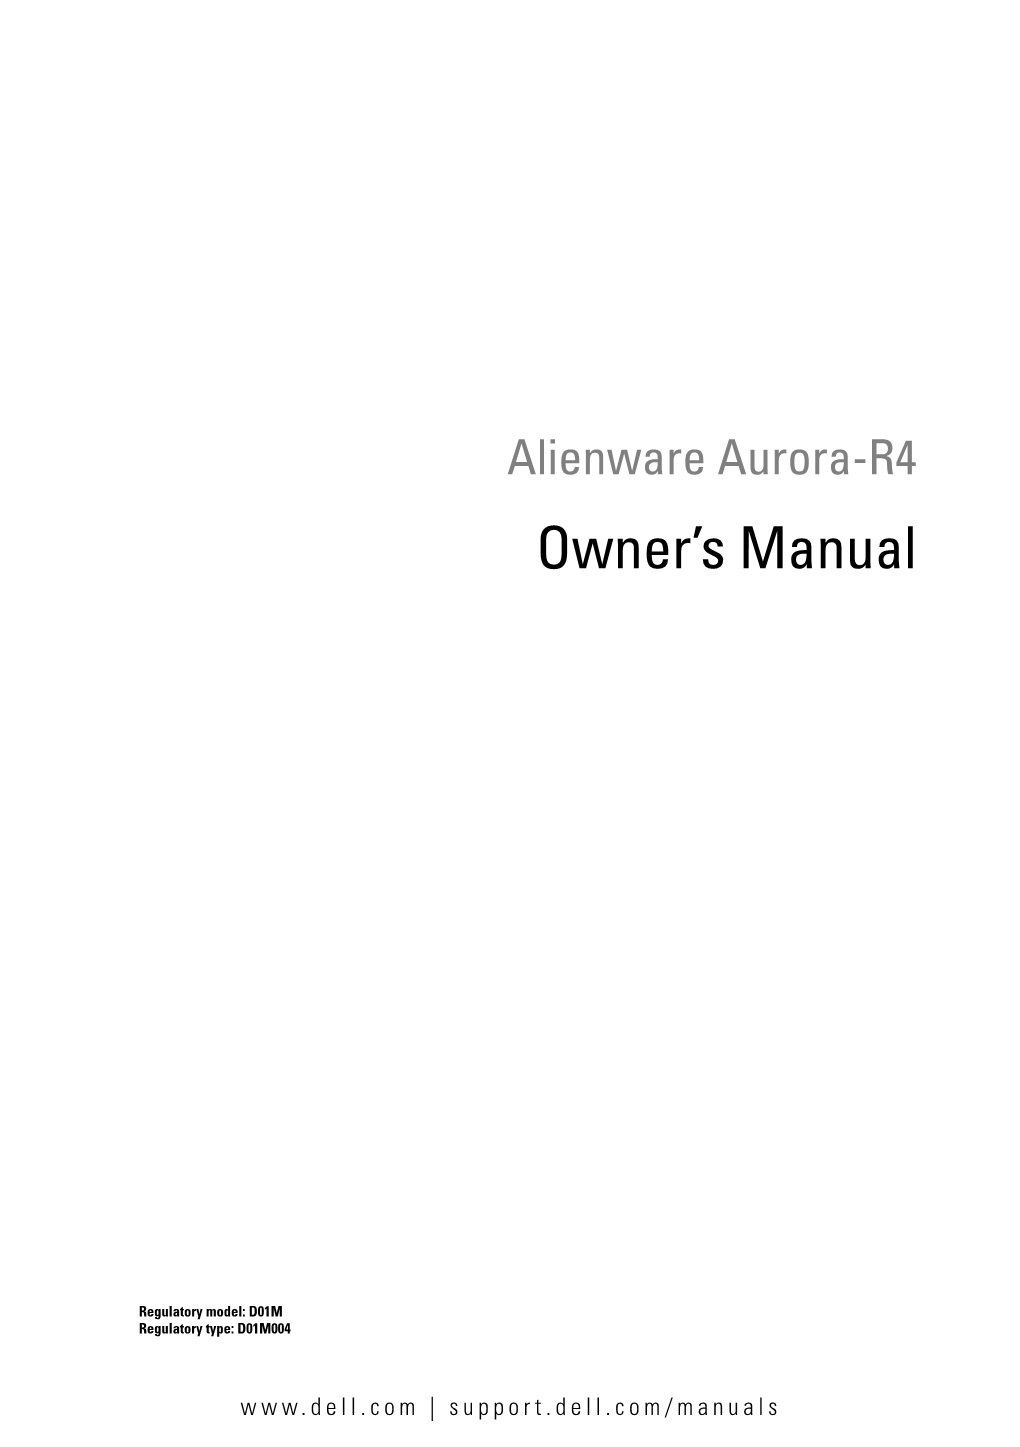 Alienware Aurora R4 Owner's Manual